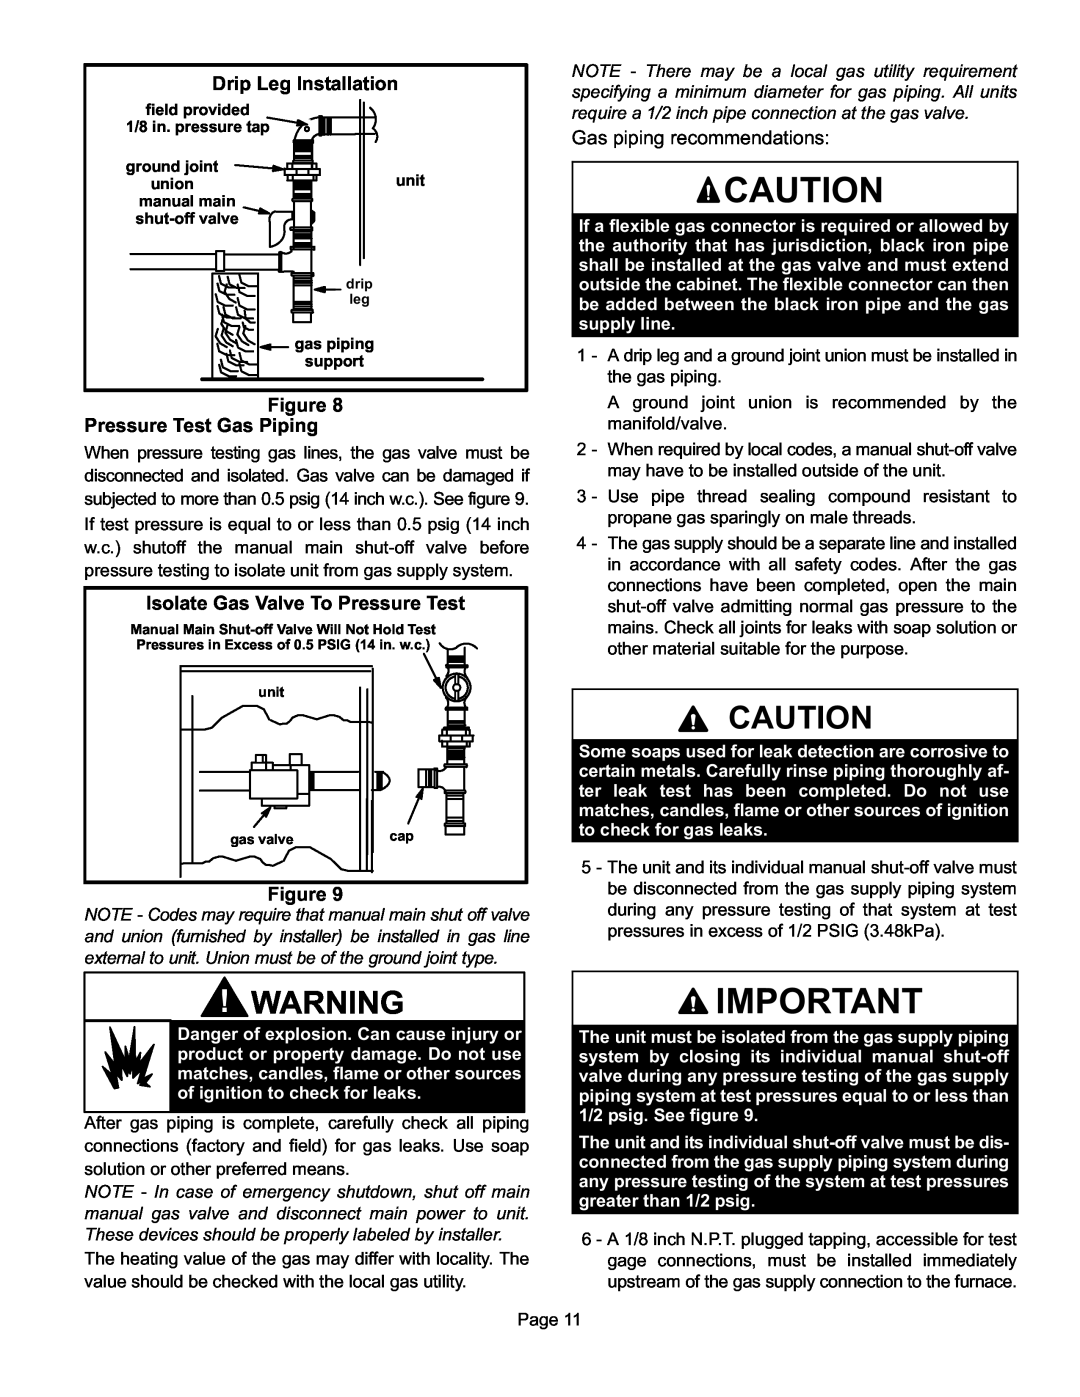 Lennox International Inc Gas Packaged Units, 15GCSX Drip Leg Installation, Figure Pressure Test Gas Piping 